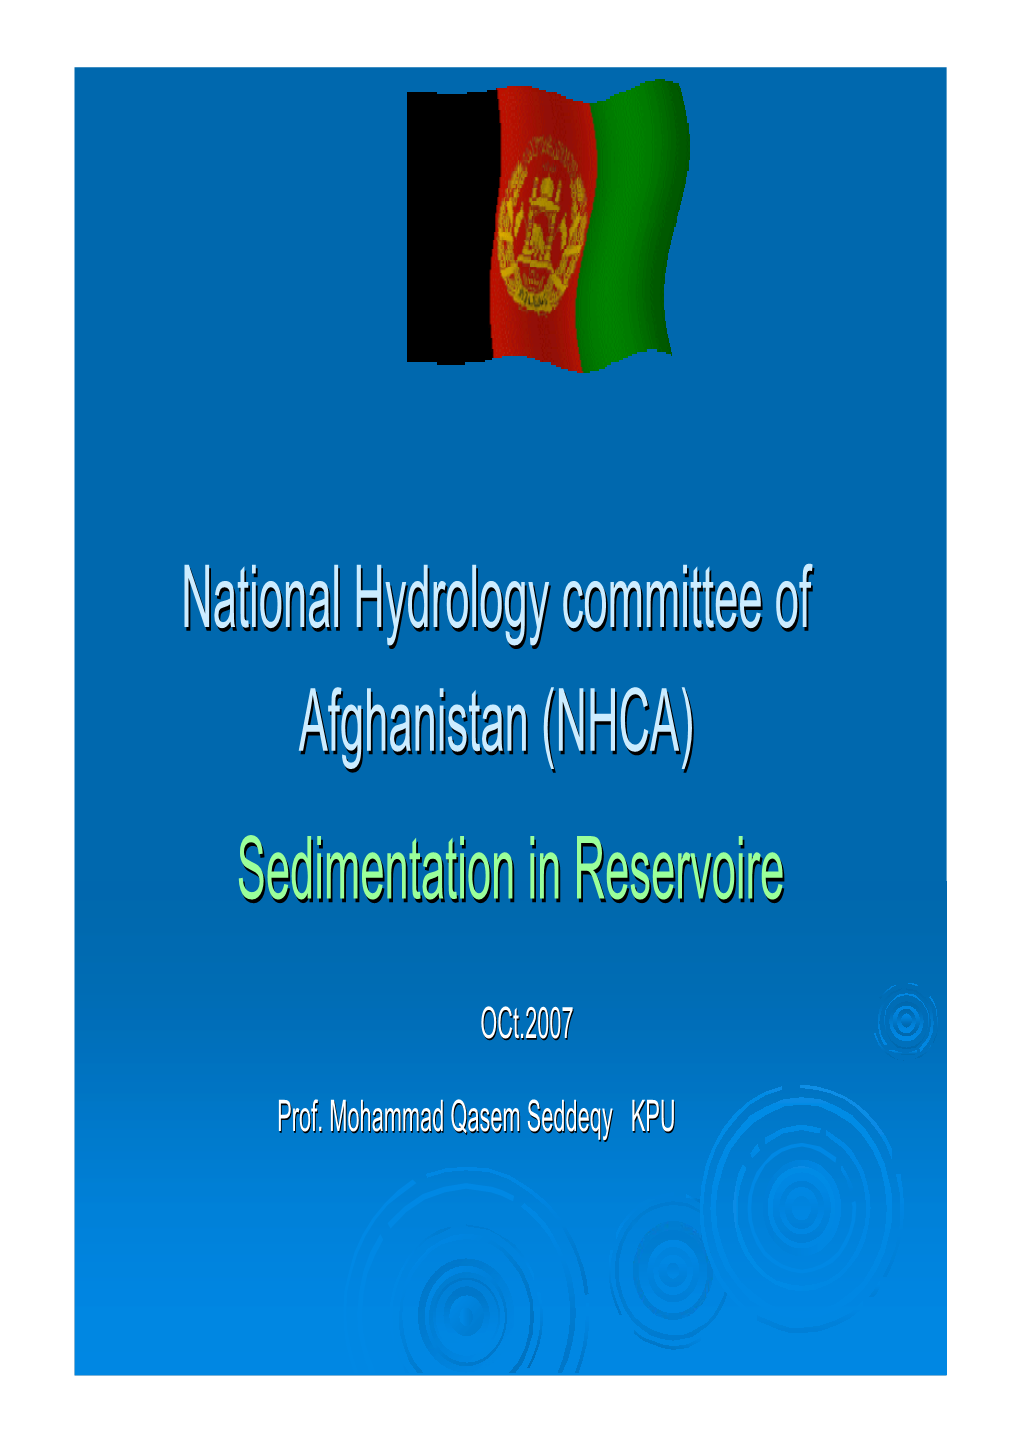 National Hydrology Committee of Afghanistan (NHCA) Sedimentation